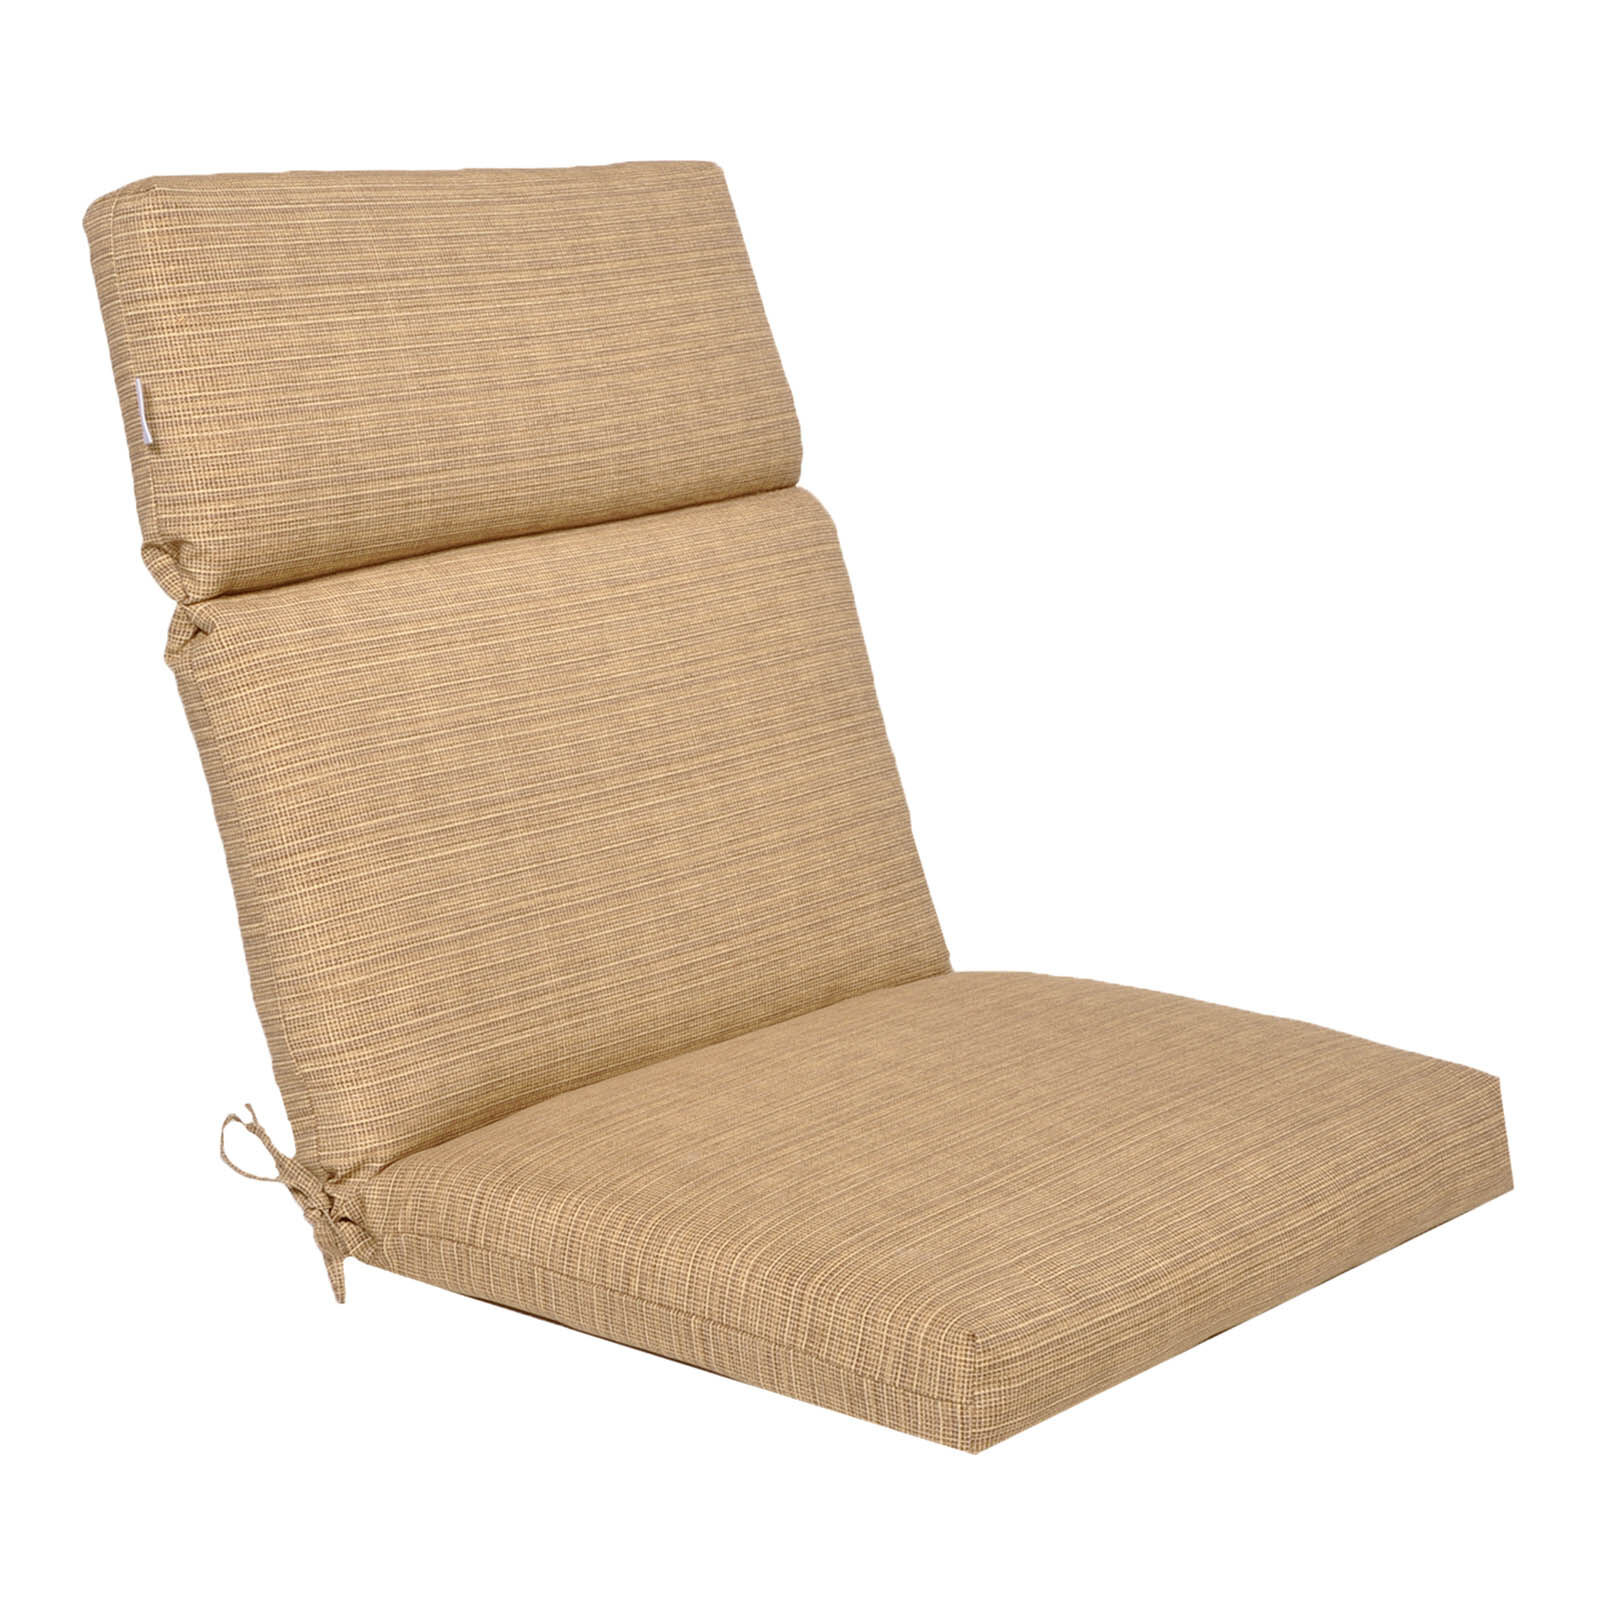 Tallon Birch Outdoor Square Seat Cushion